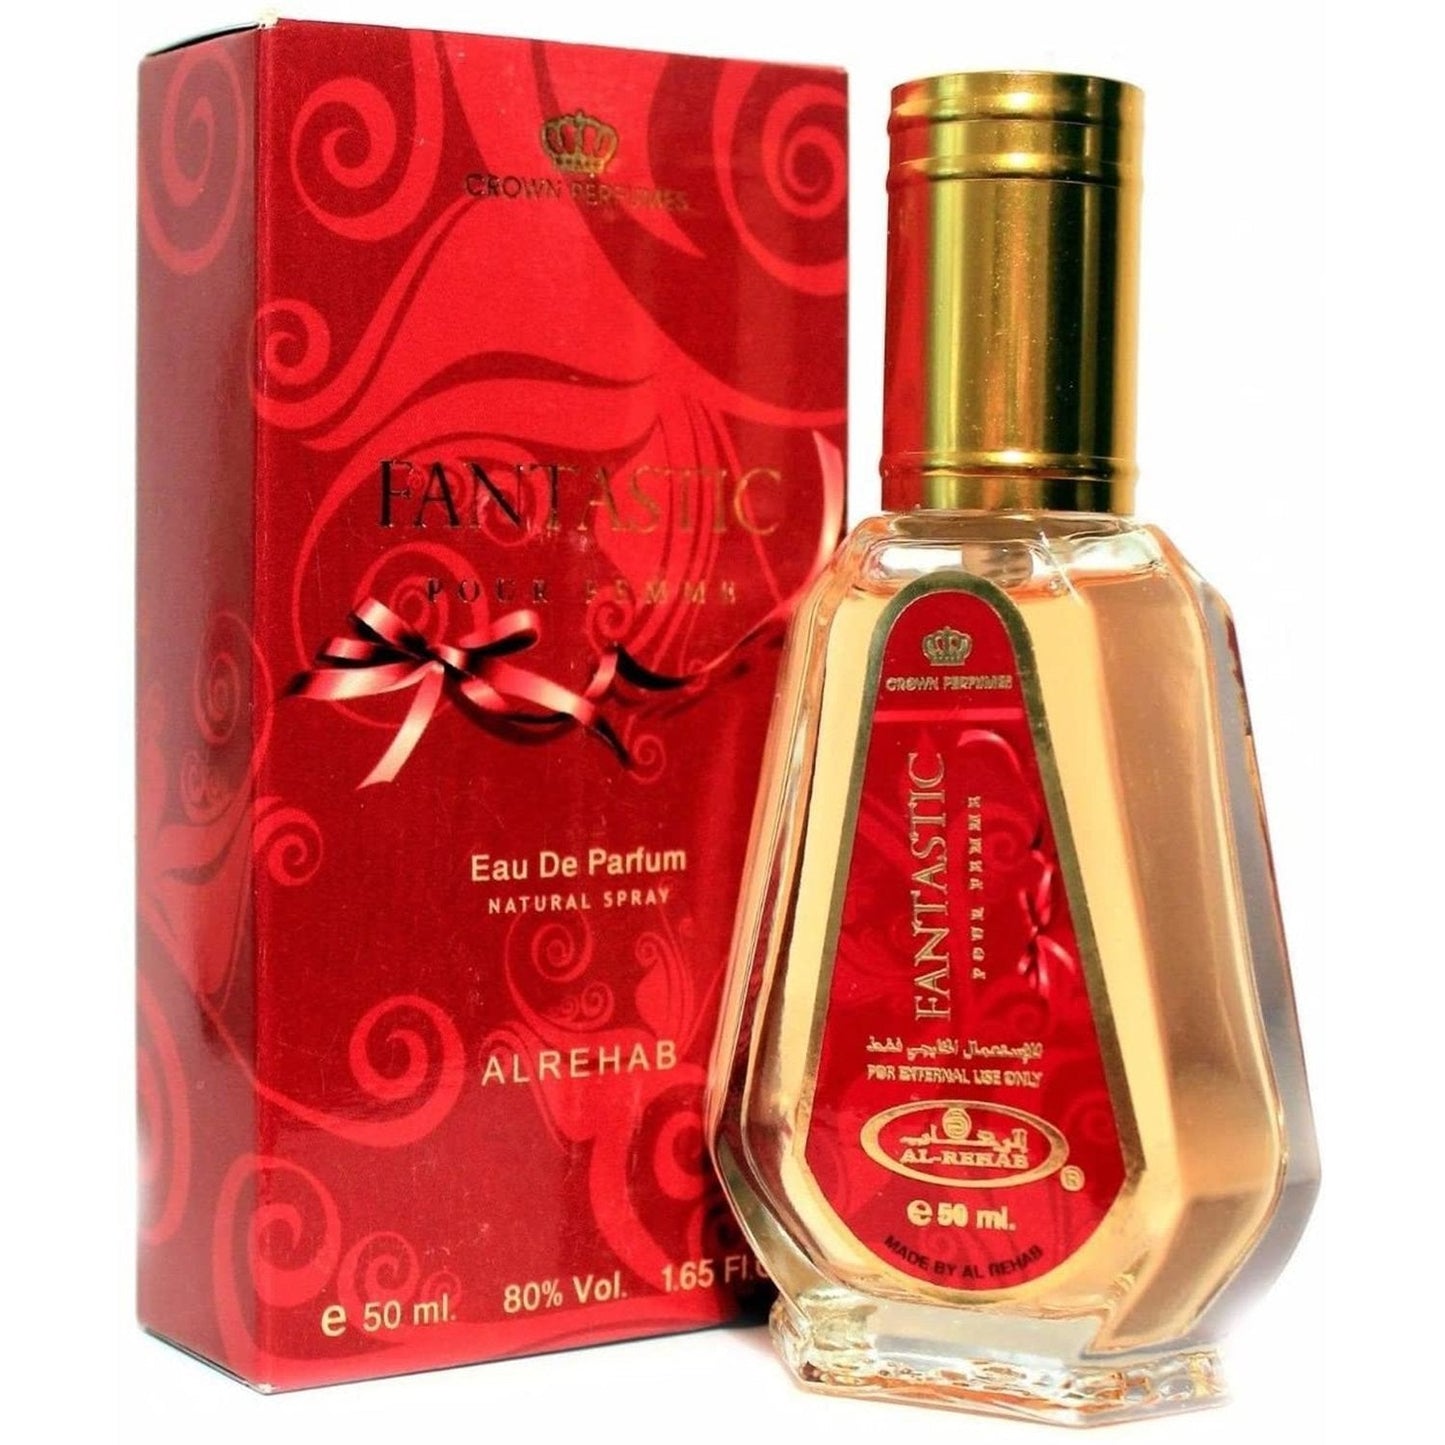 Fantastic Perfume Spray 50ml Al Rehab-Perfume Heaven